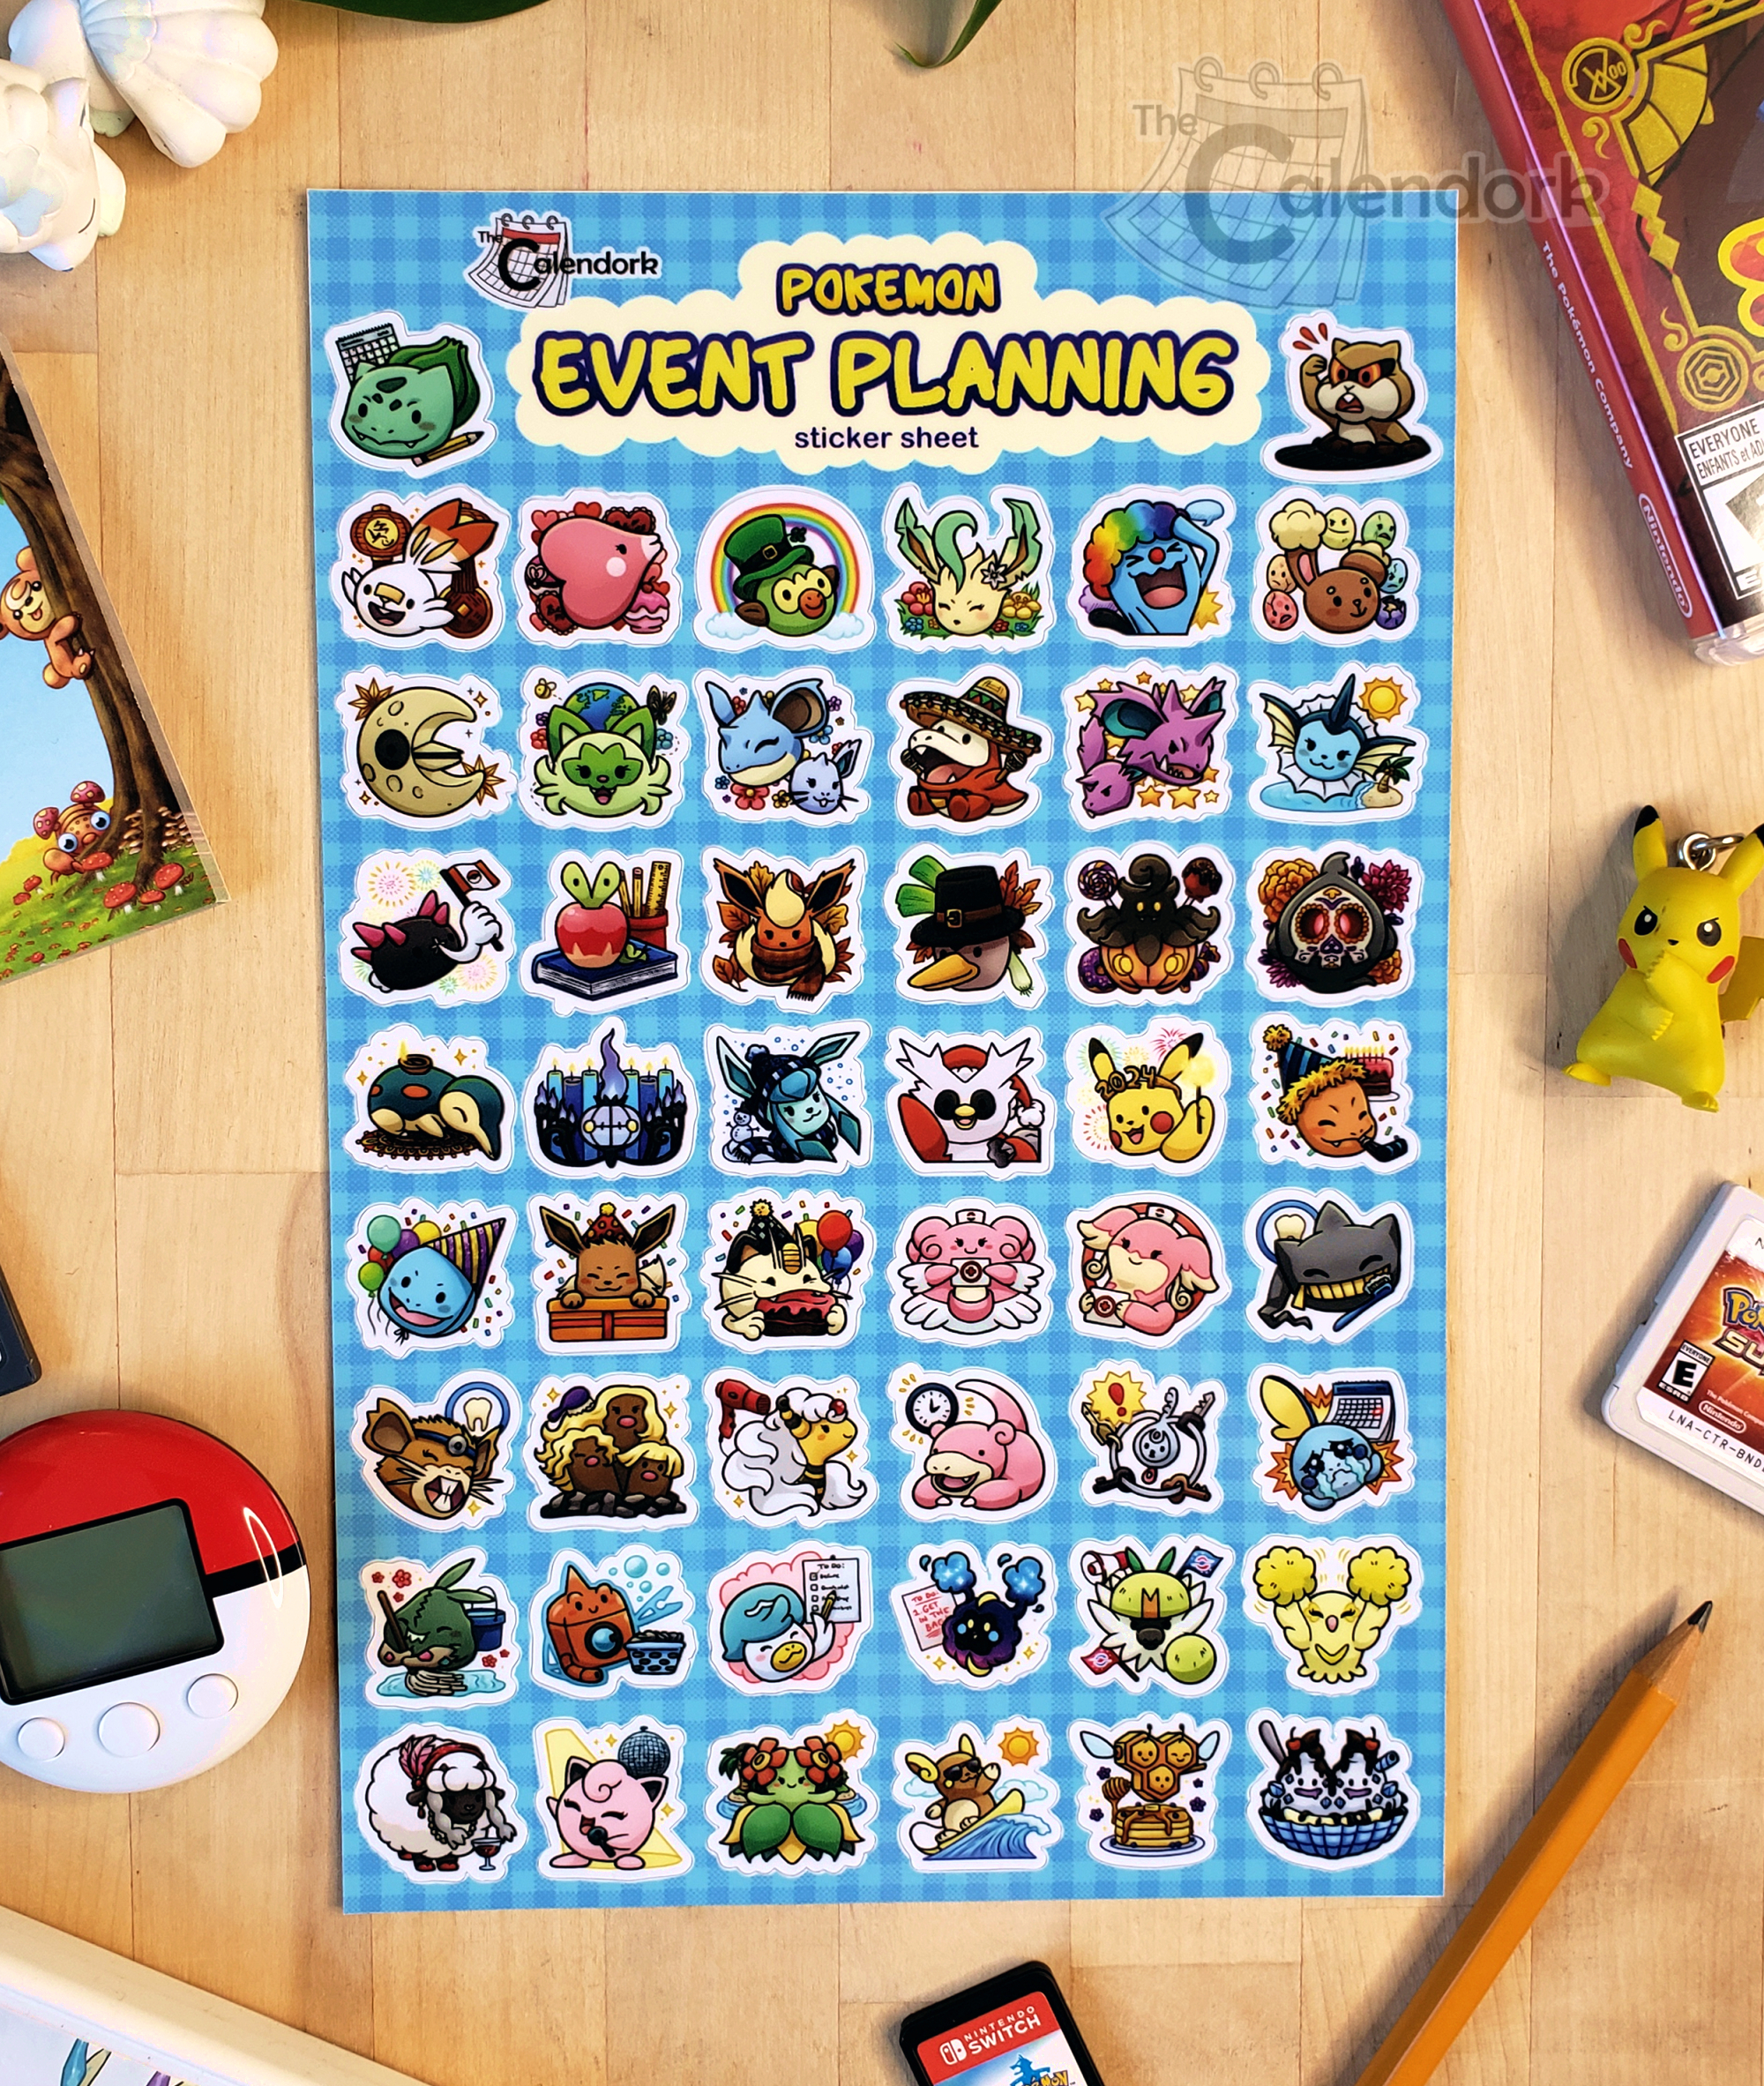 Pokemon Planner Sticker Sheet – The Calendork